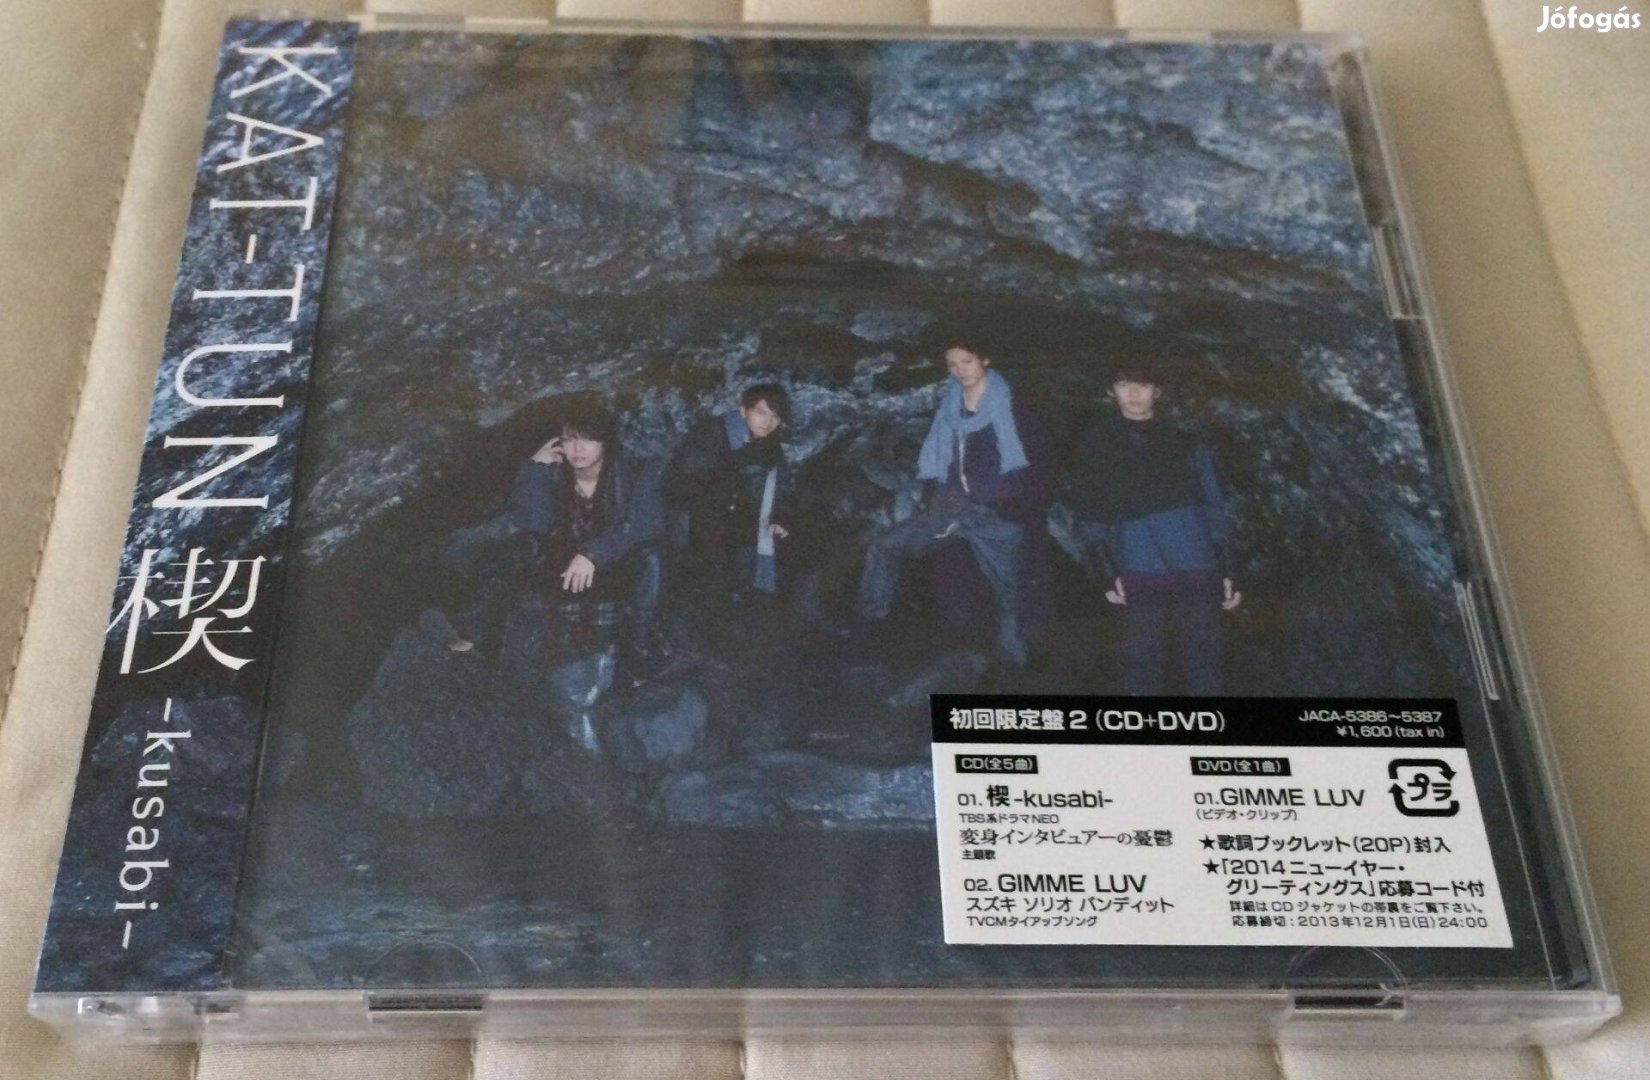 Eredeti Ázsia Japán pop rock jpop jrock kusabi 2 CD DVD album